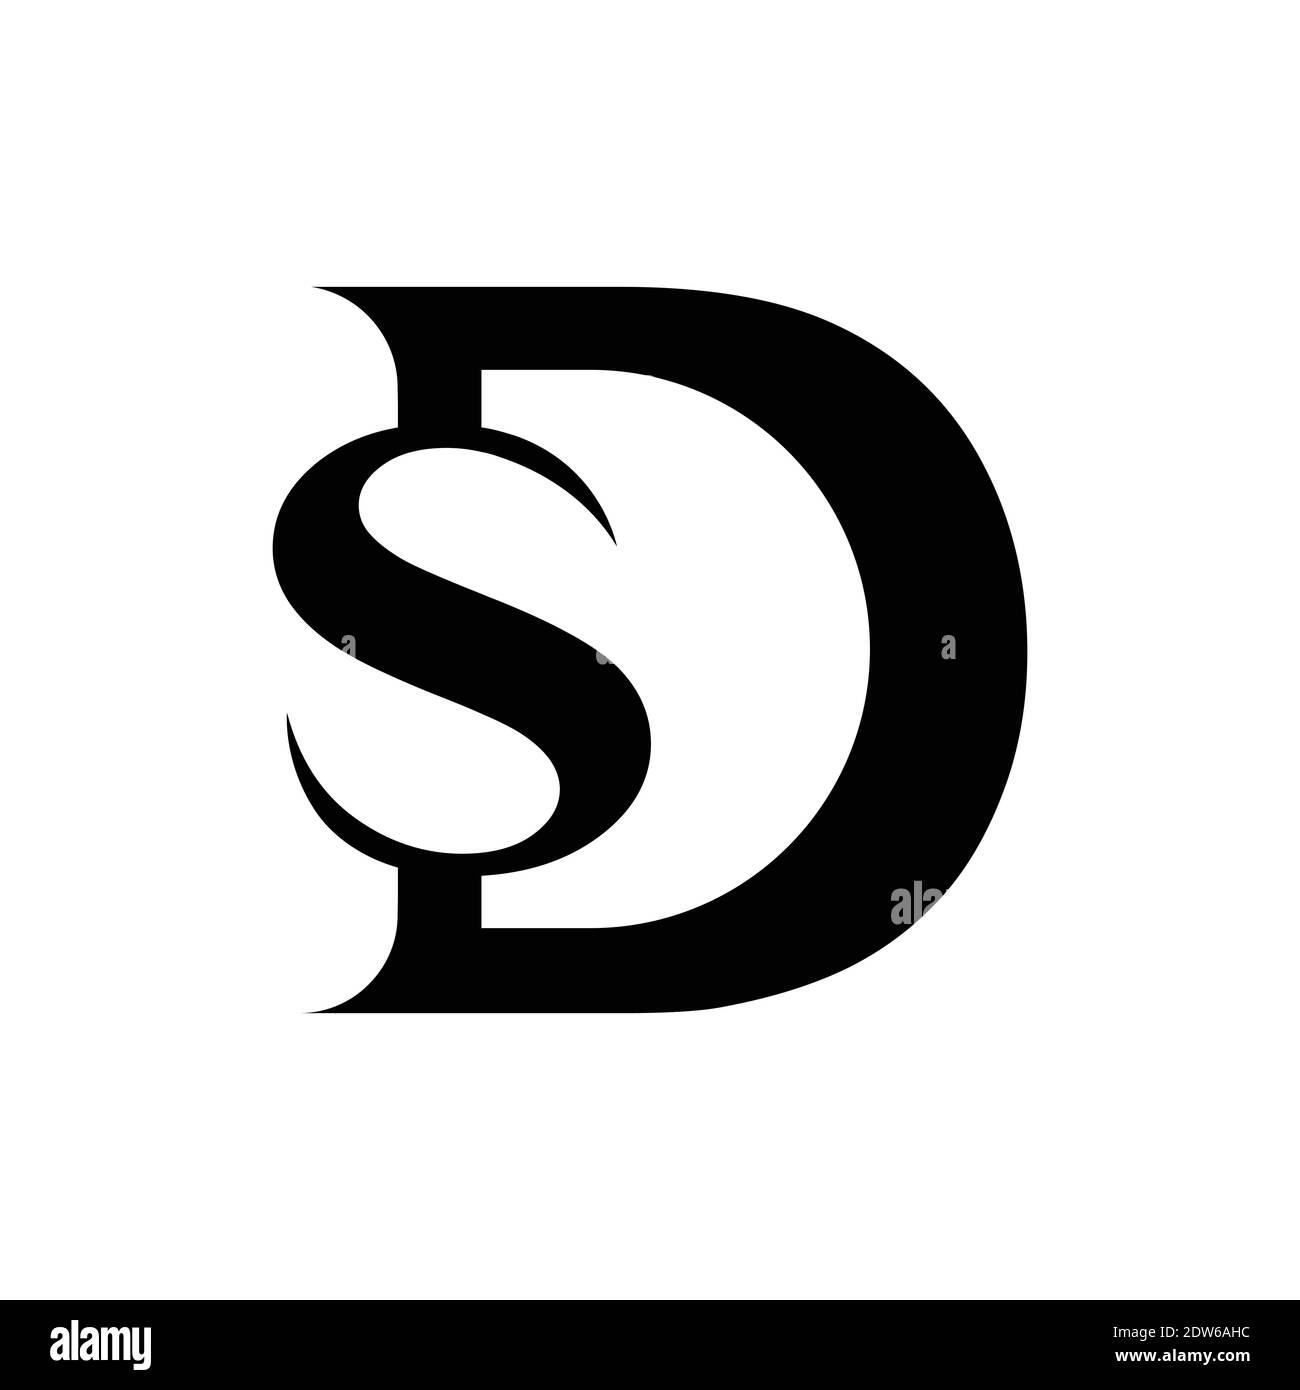 Initial letter ds logo or sd logo vector design template Stock ...